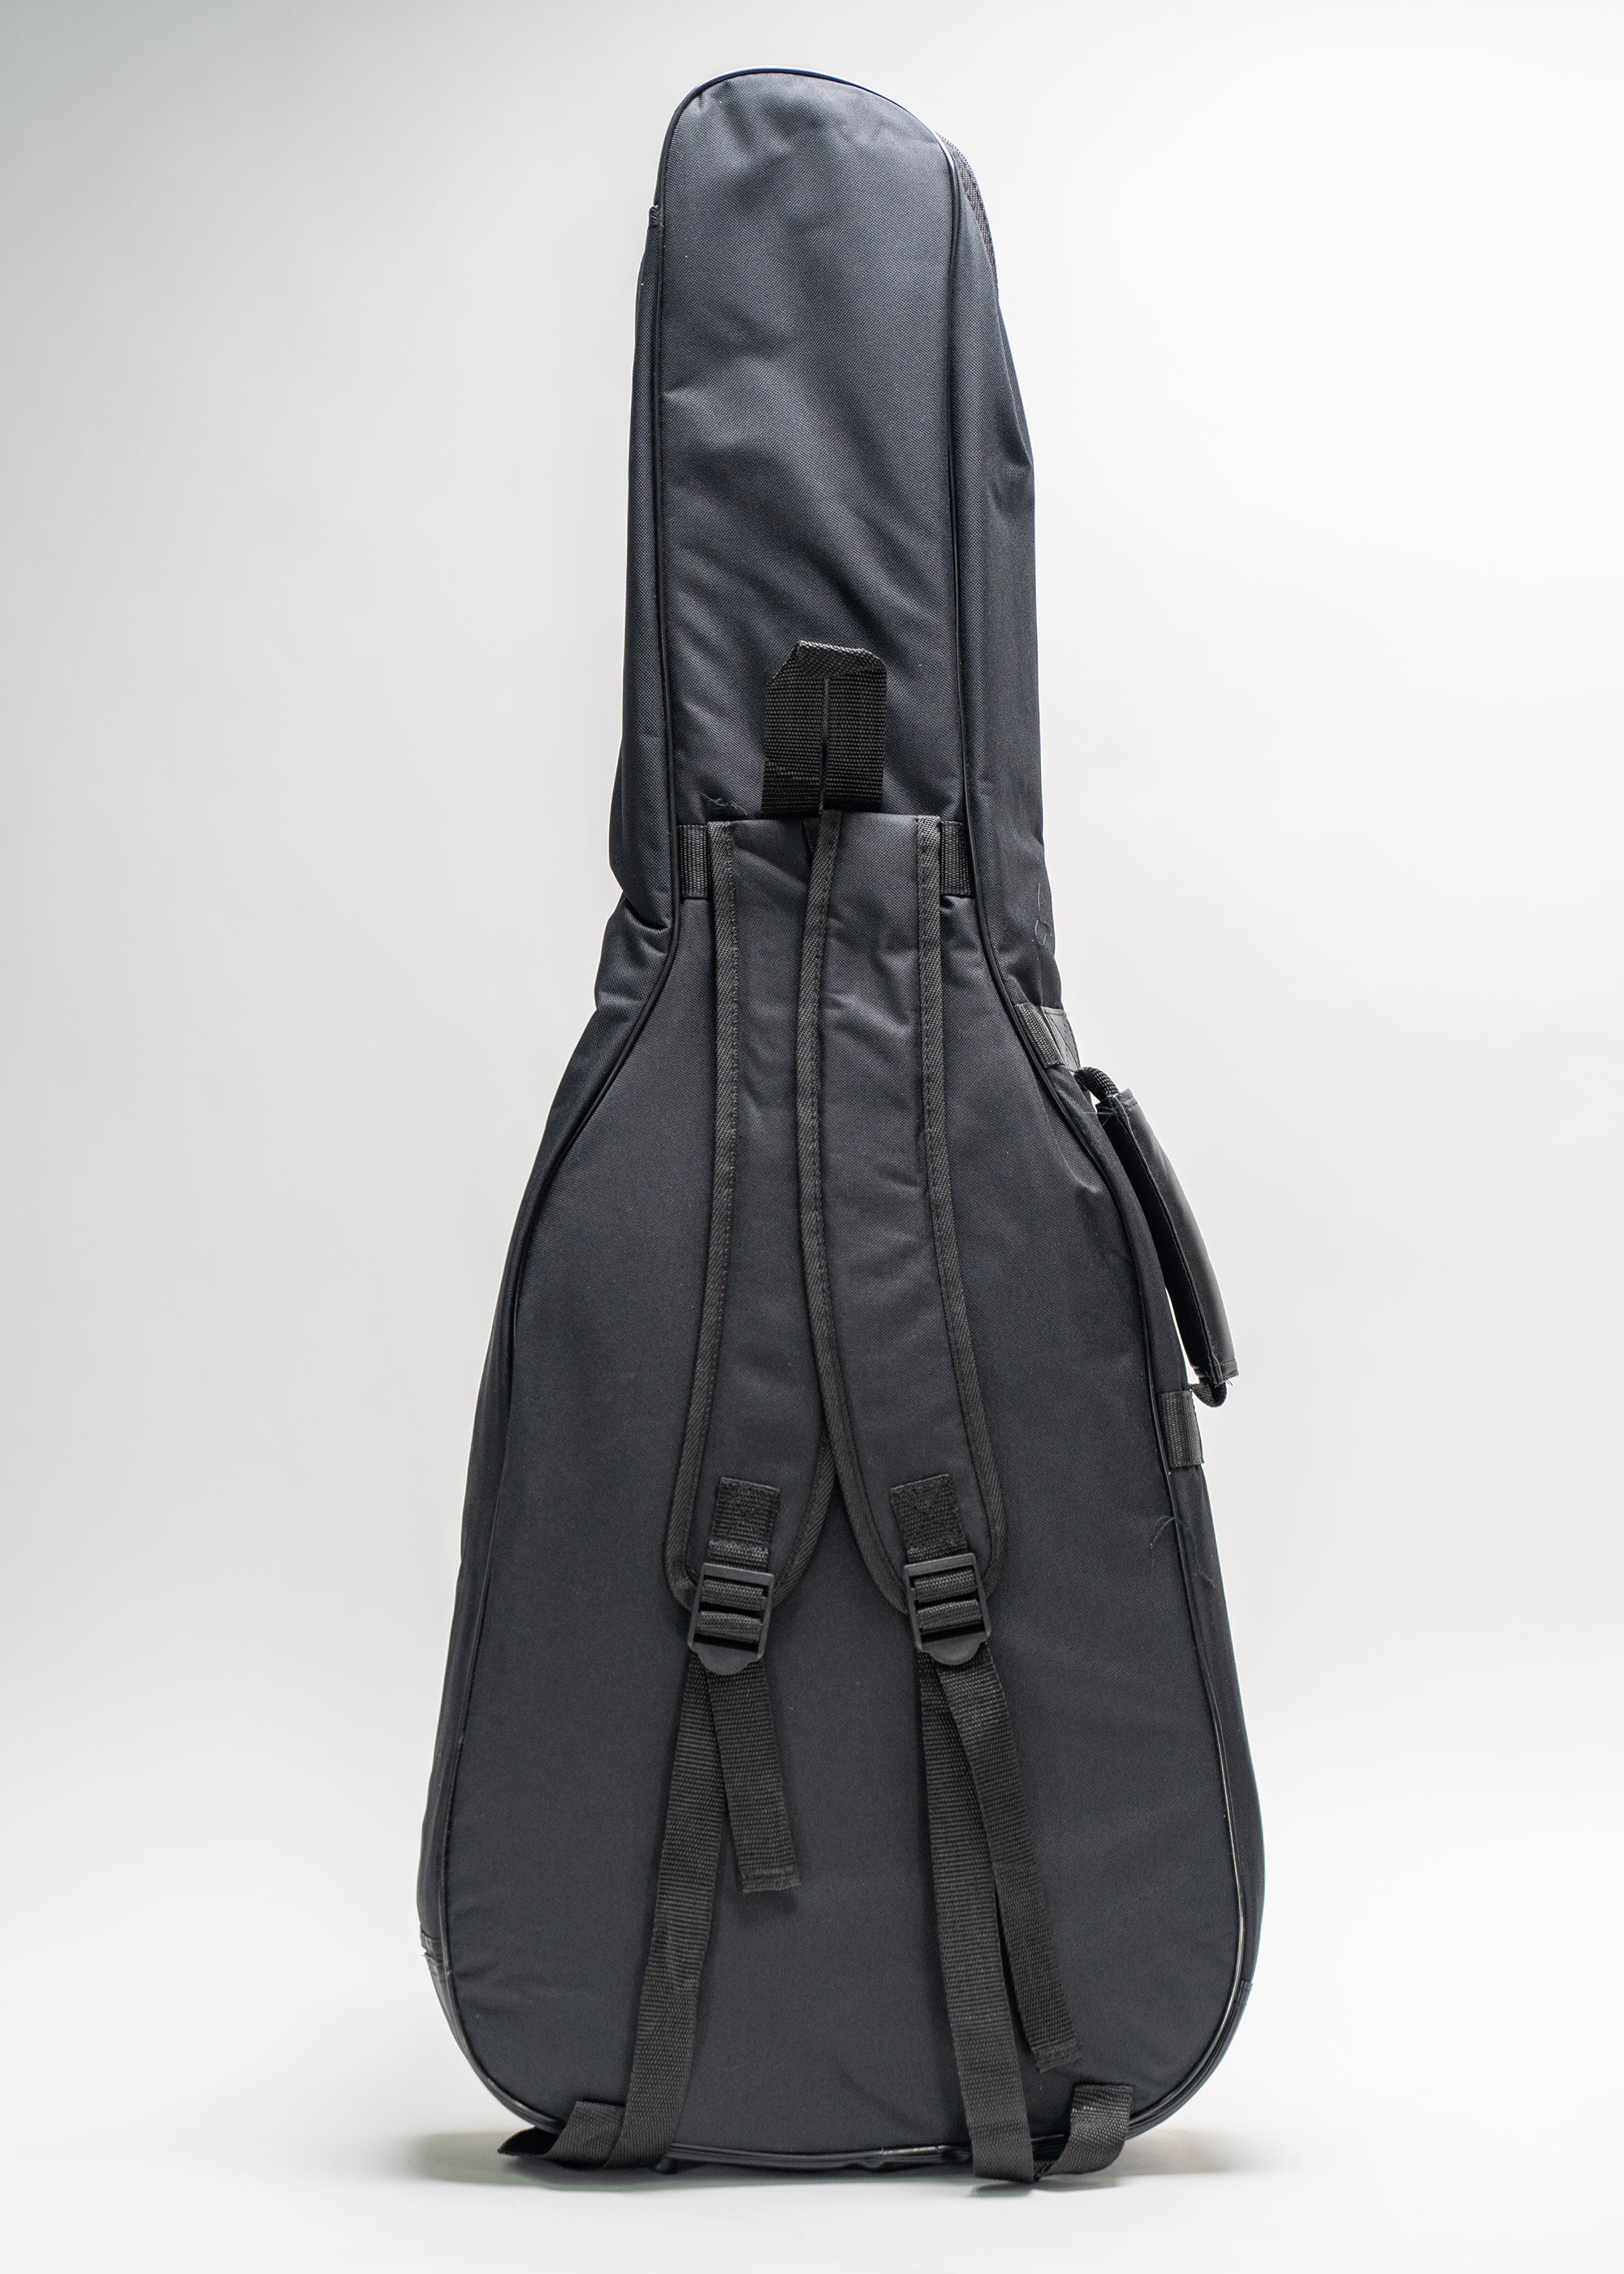 PBS GB-C10 Classical Guitar Bag 10mm Padding